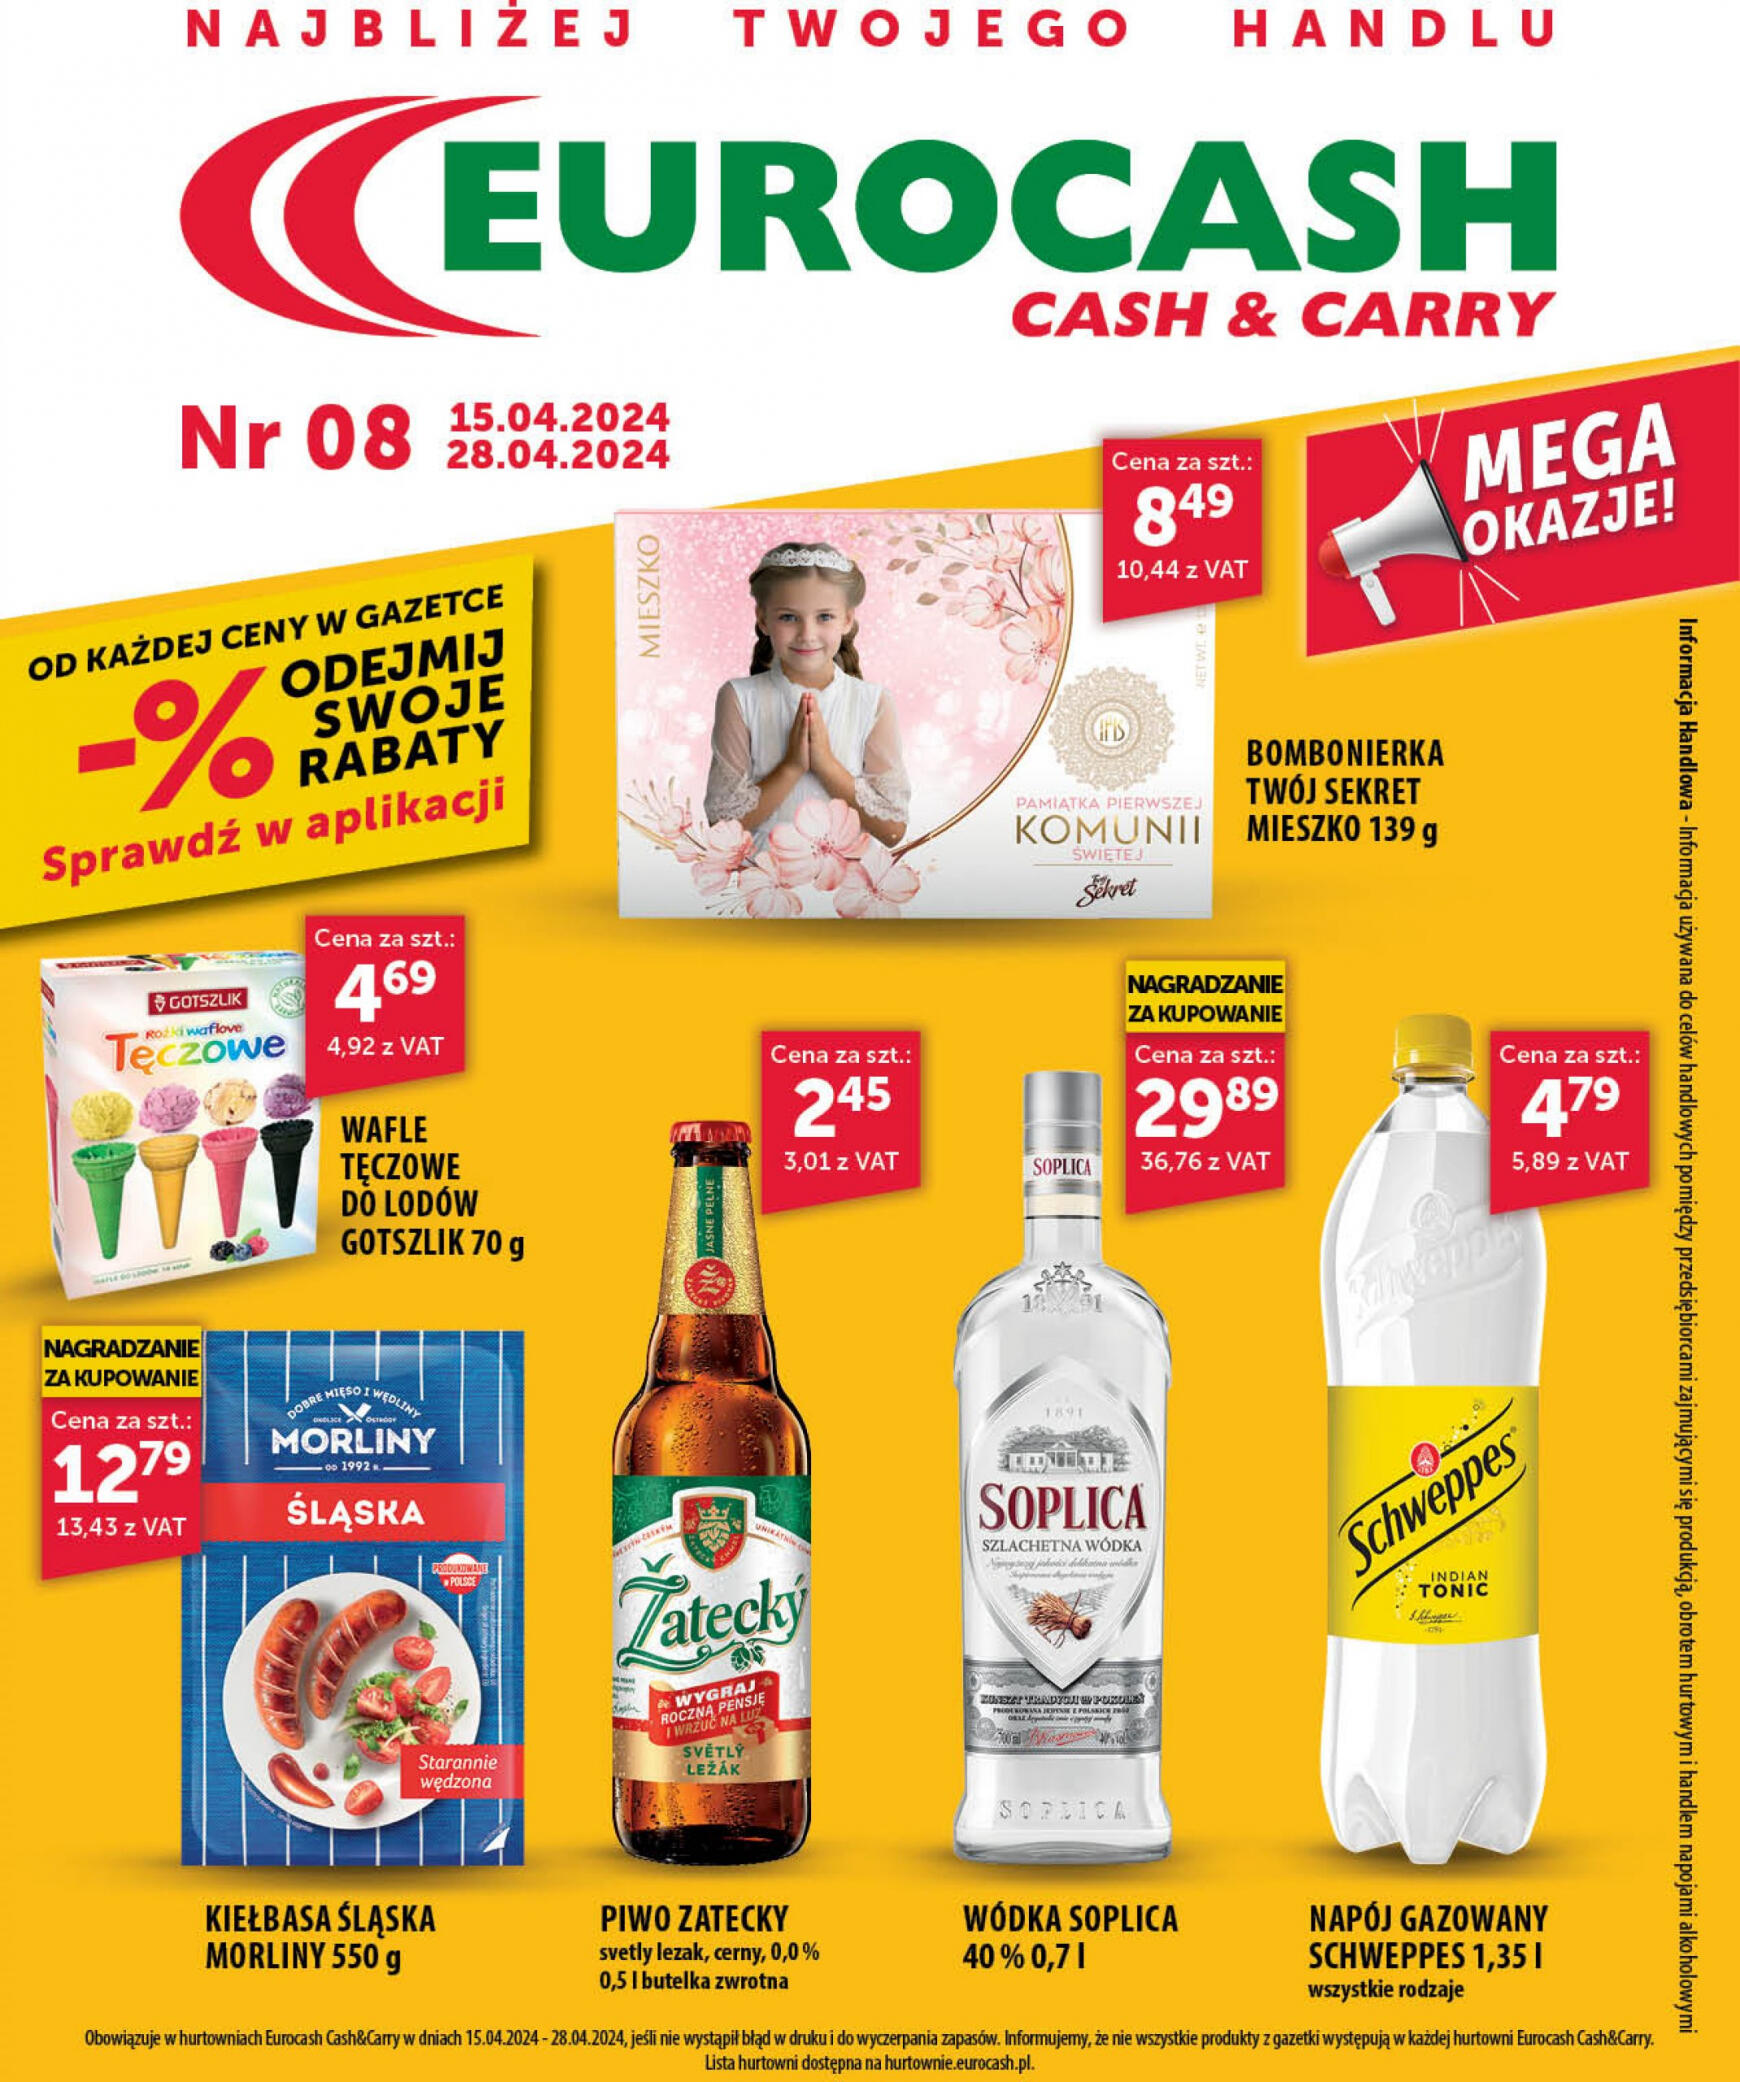 eurocash - Eurocash - Gazetka Cash&Carry gazetka aktualna ważna od 15.04. - 28.04.